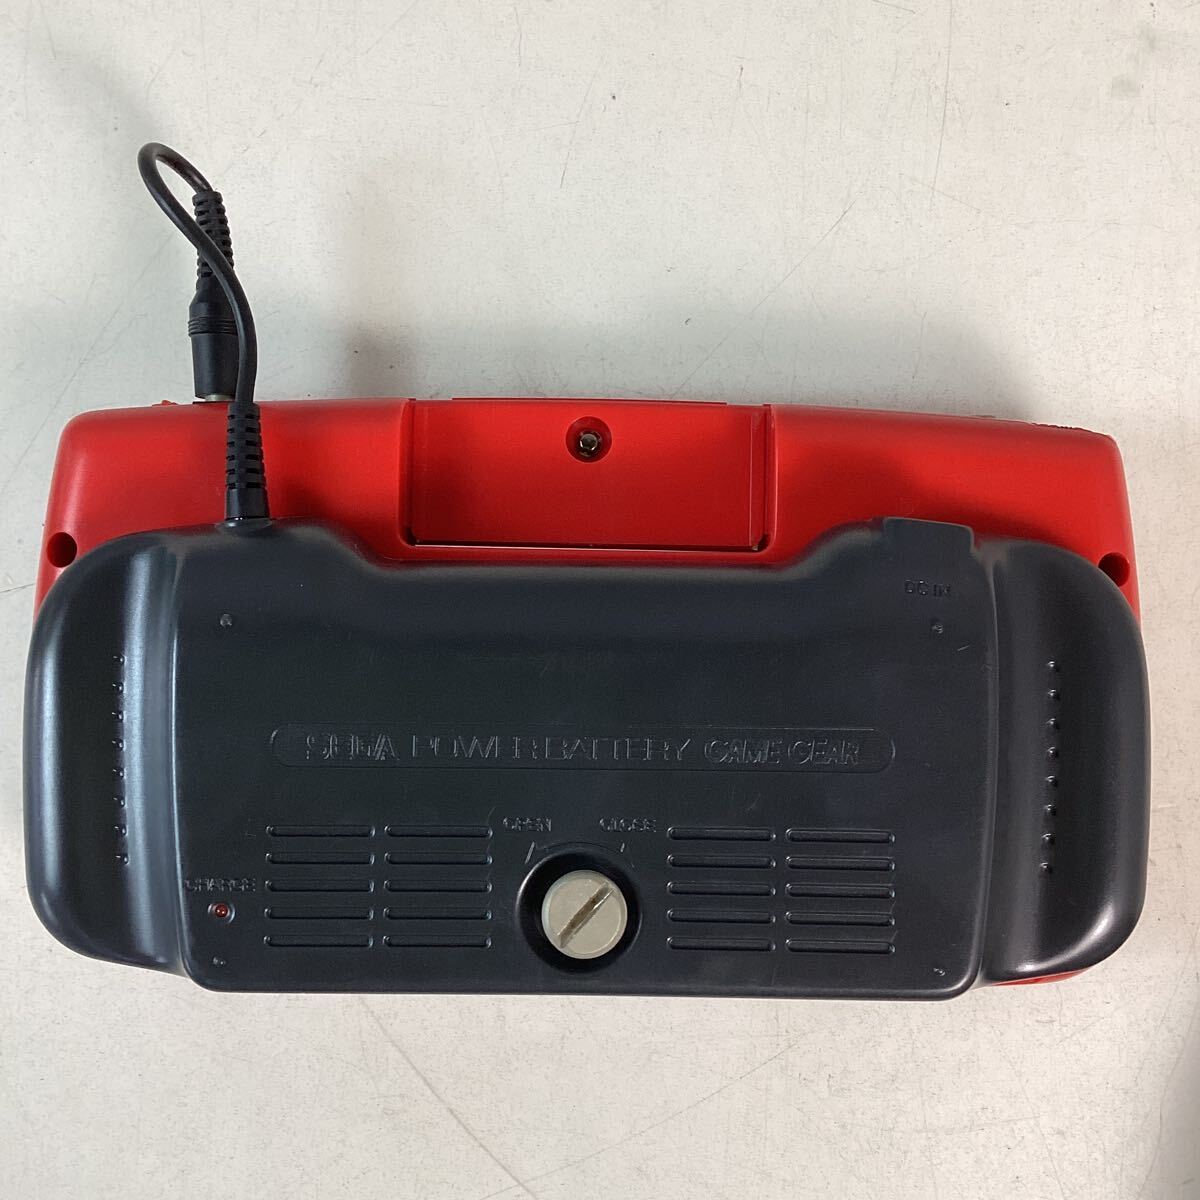 y536 Sega Game Gear red AC adaptor TV tuner battery pack power battery attached SEGA GAME GEAR electrification equipped Junk 